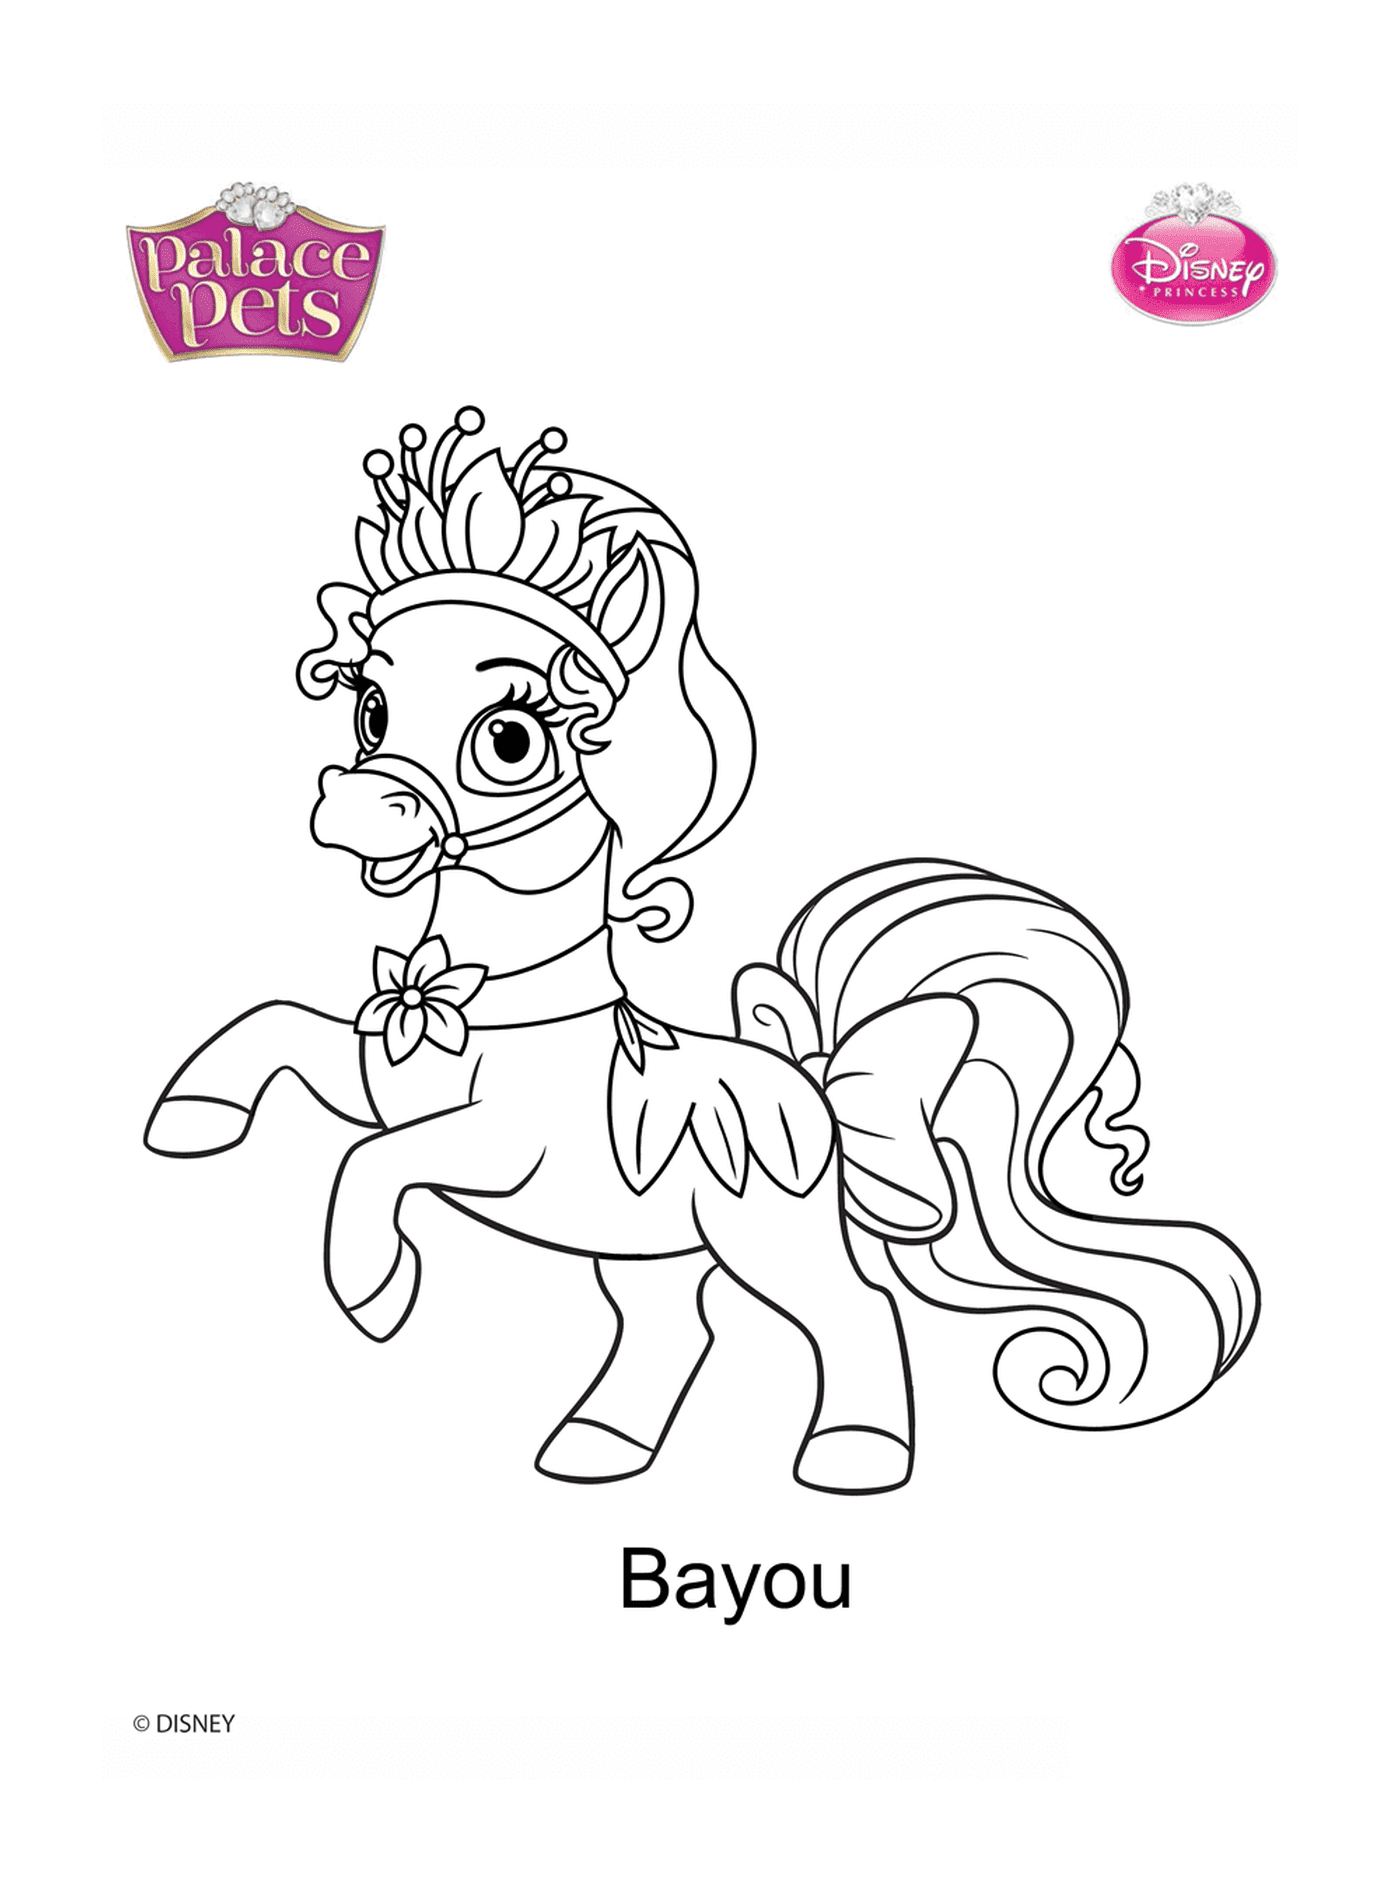   Bayou, poney princesse gracieux 